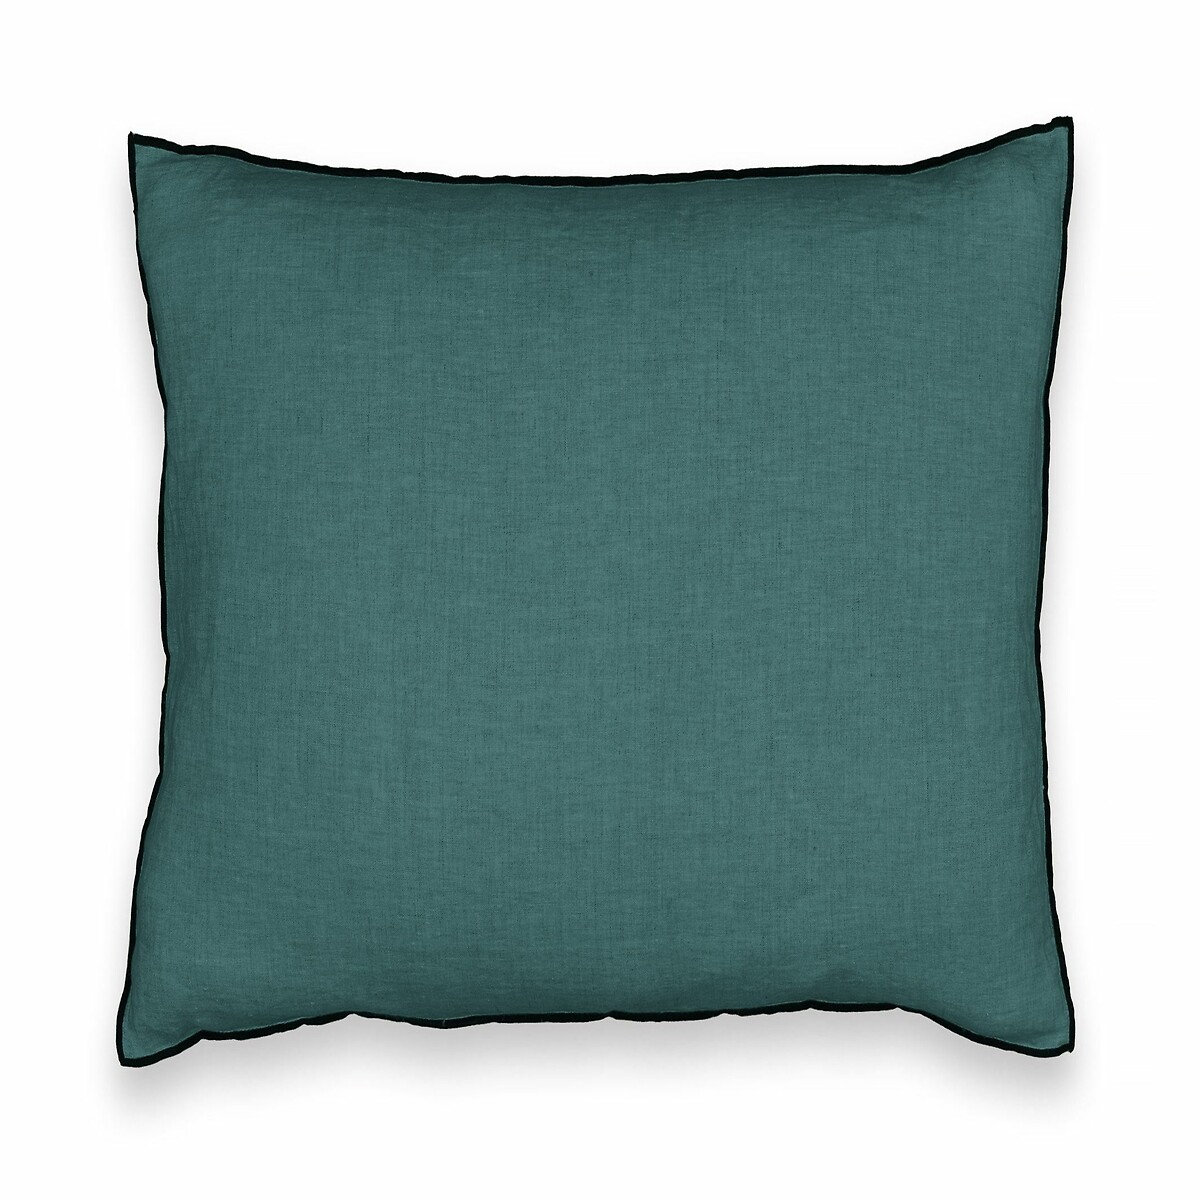 Чехол AM.PM На подушку 100 стираный лен ELina 50 x 50 см зеленый, размер 50 x 50 см - фото 2